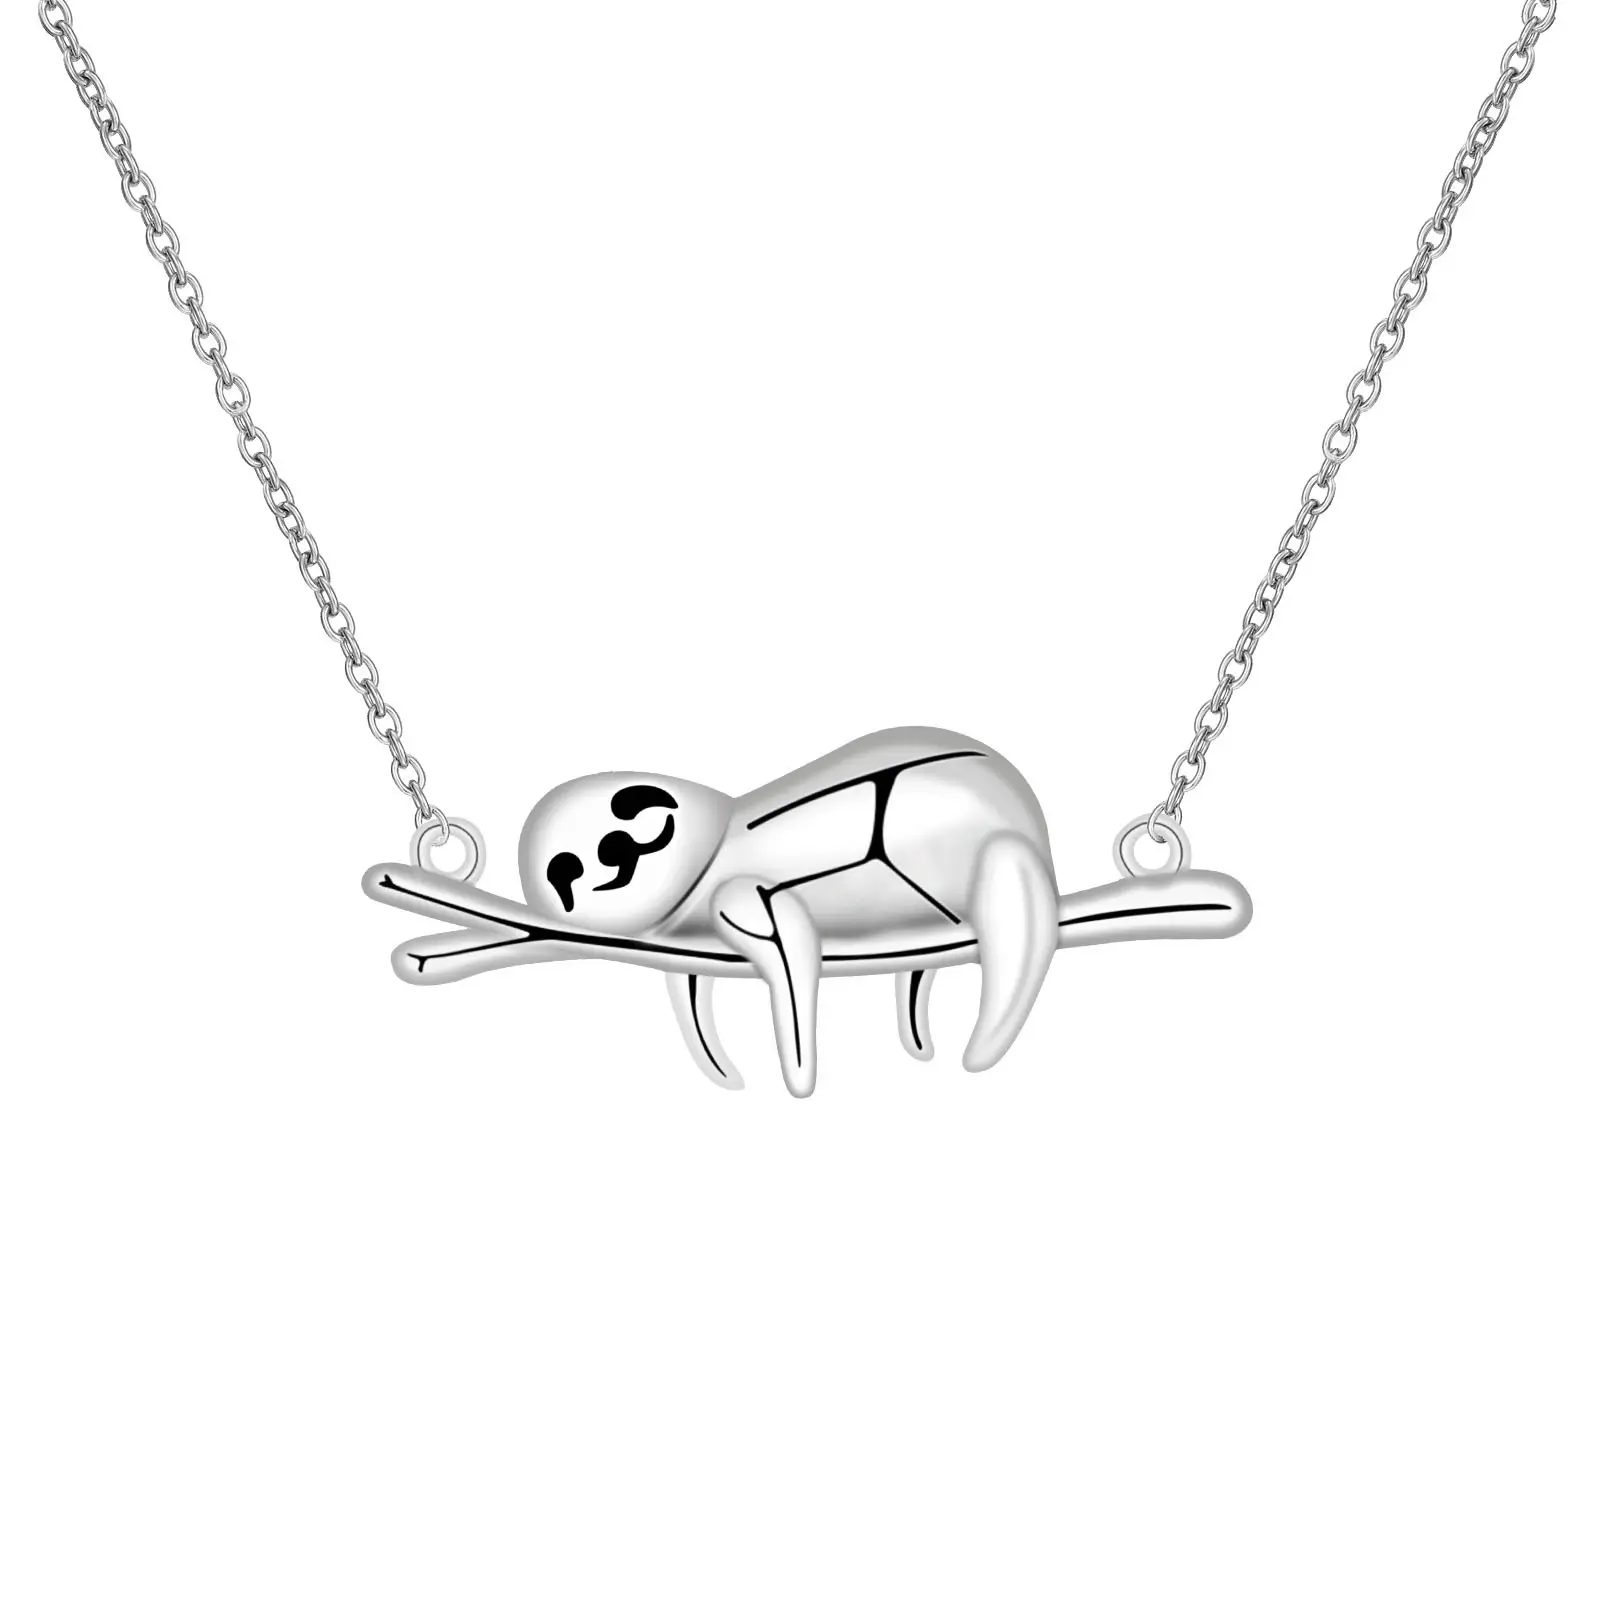 Fashion Creative Design Alloy Necklace Jewelry Elegant Wholesale Cute Animal Pendant Necklace for Women